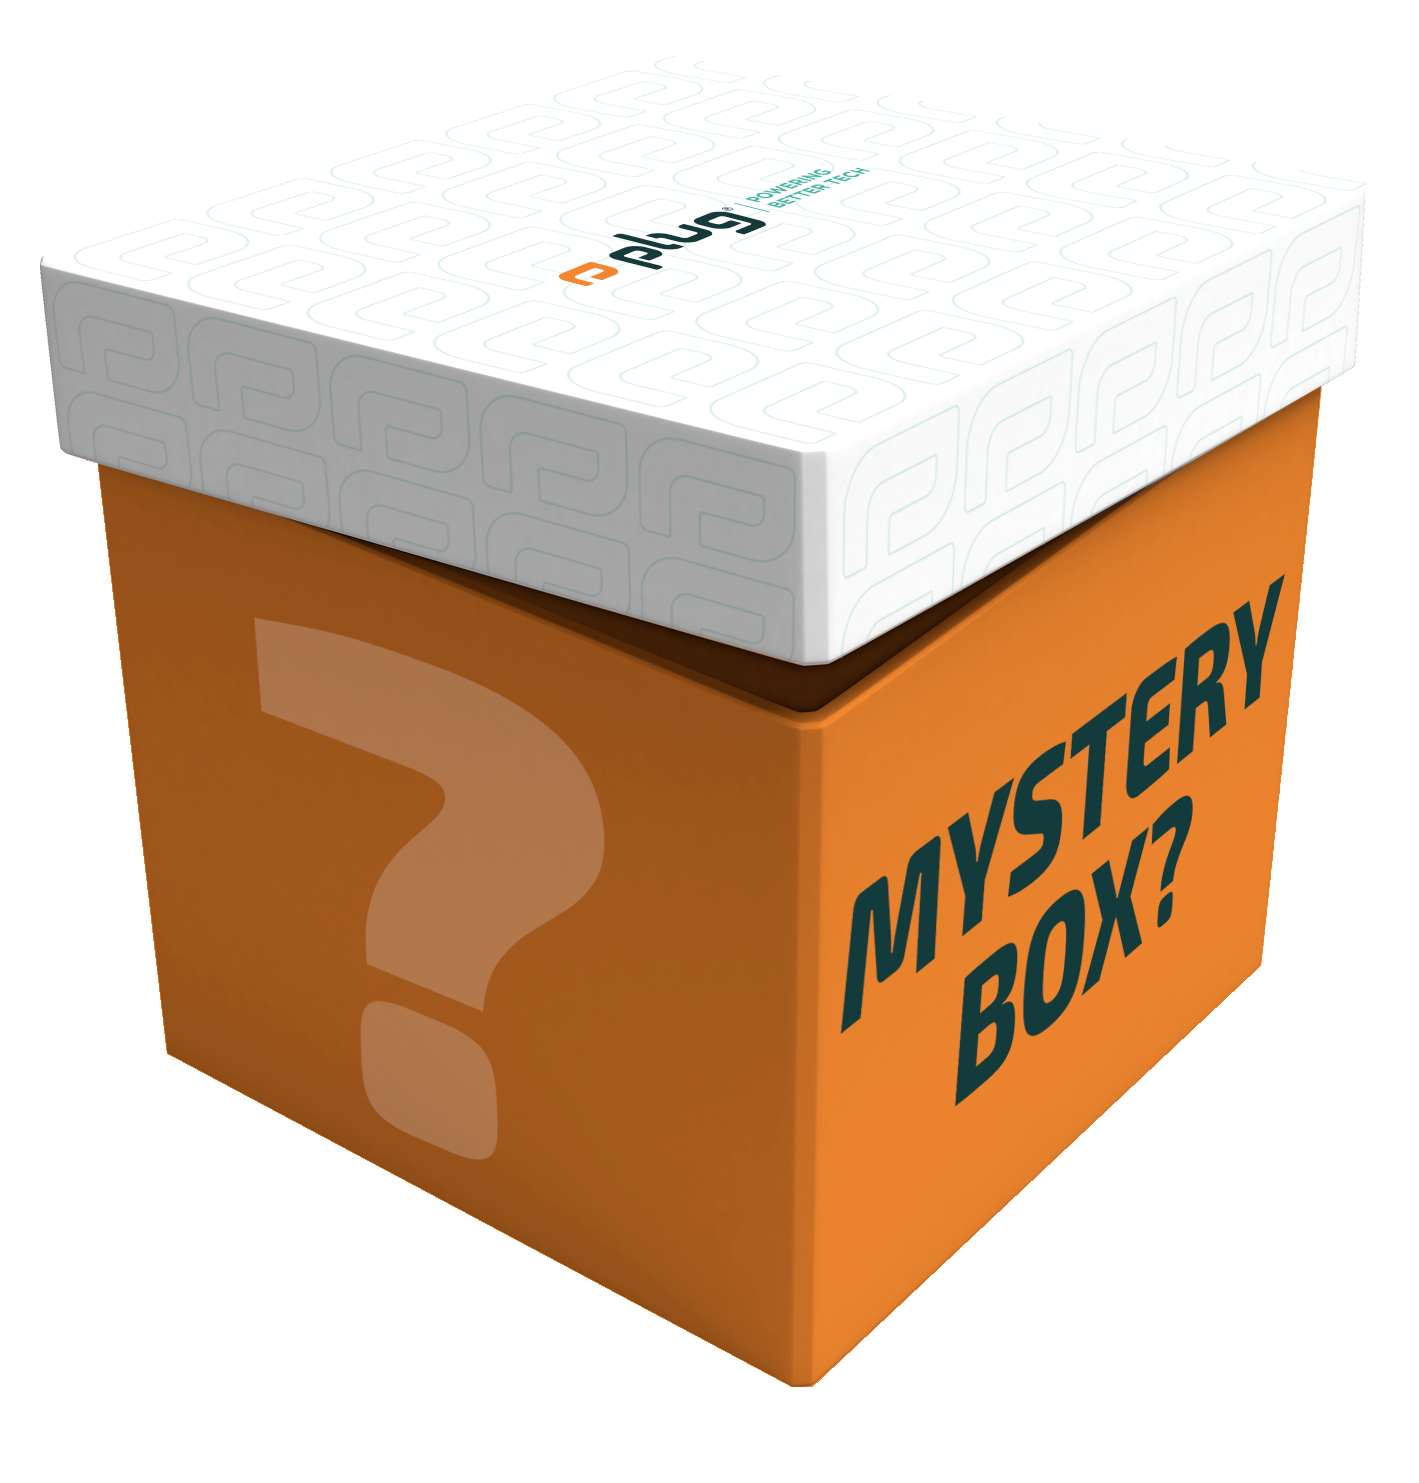 Buy Mystery Box Electronics,Electronica Mystery-Box, Mystery Box